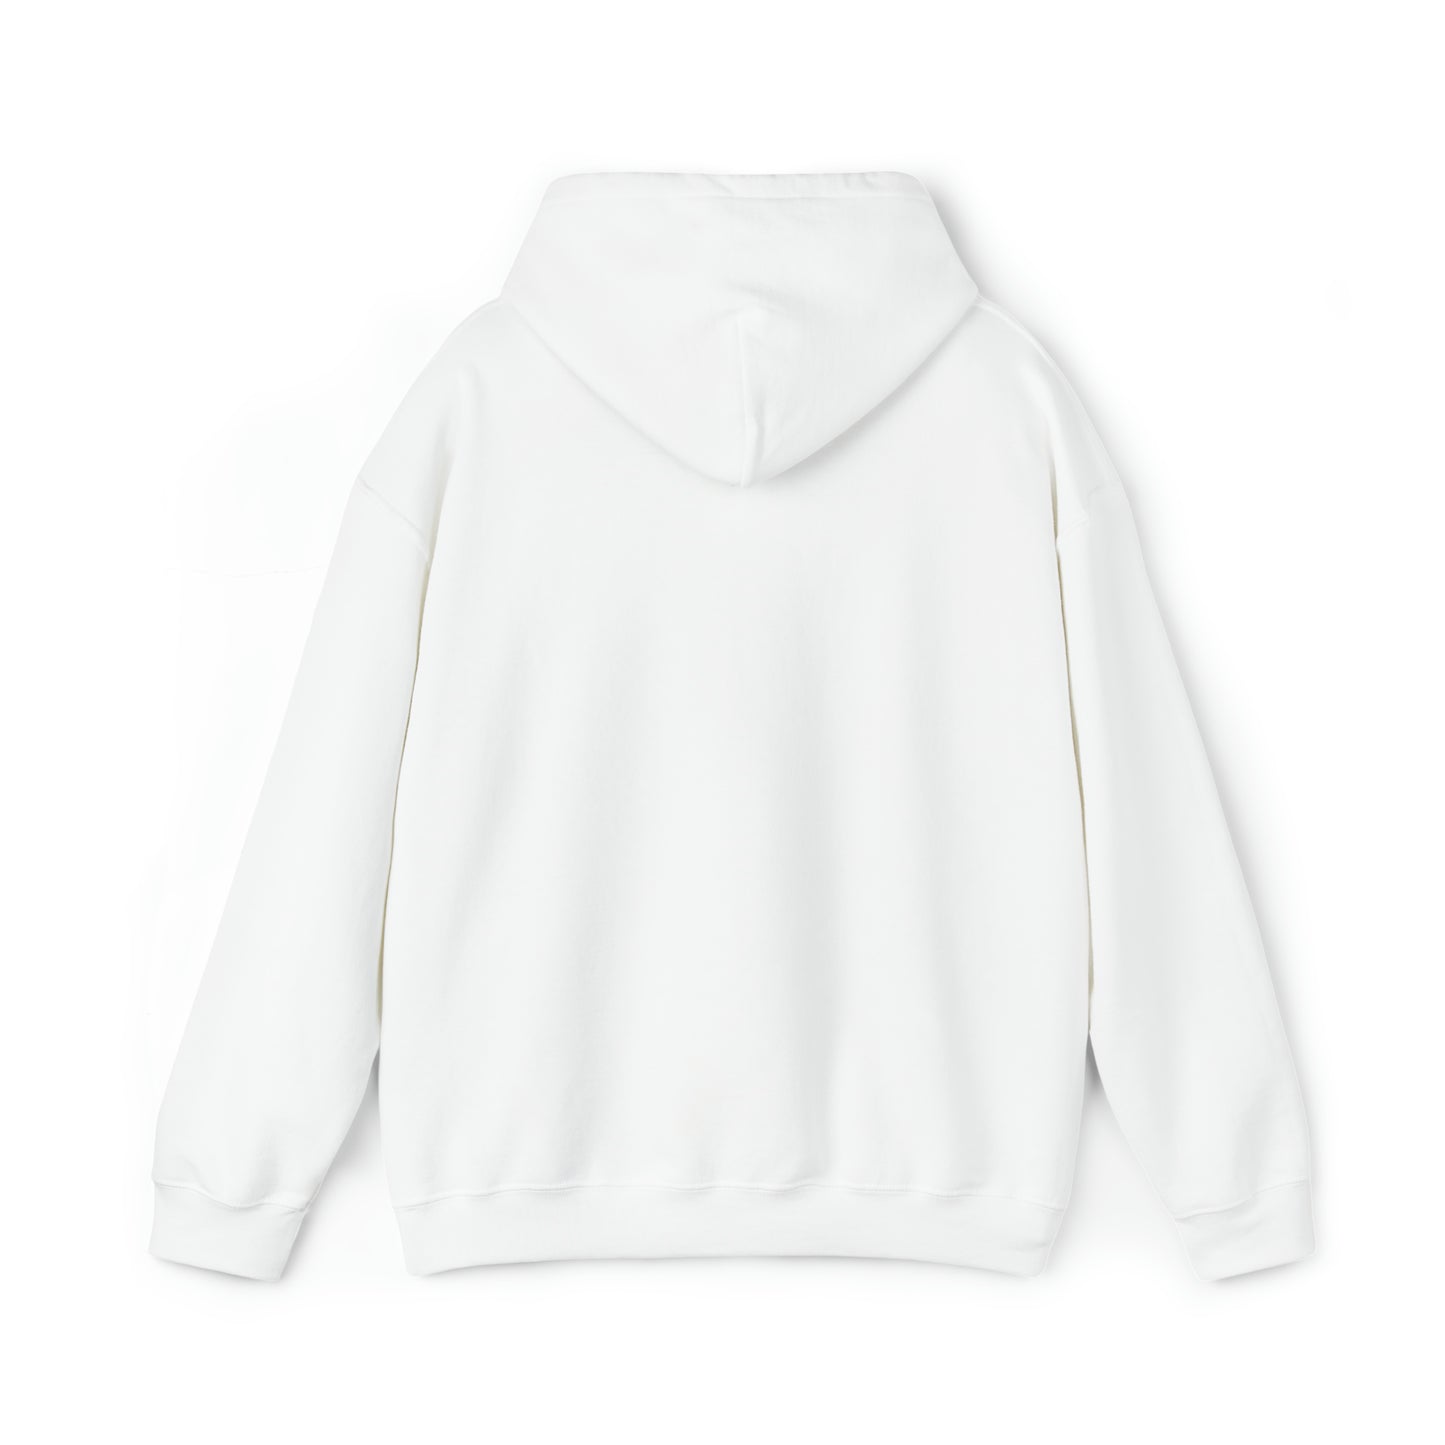 WE GALANT Unisex Heavy Blend™ Hooded Sweatshirt